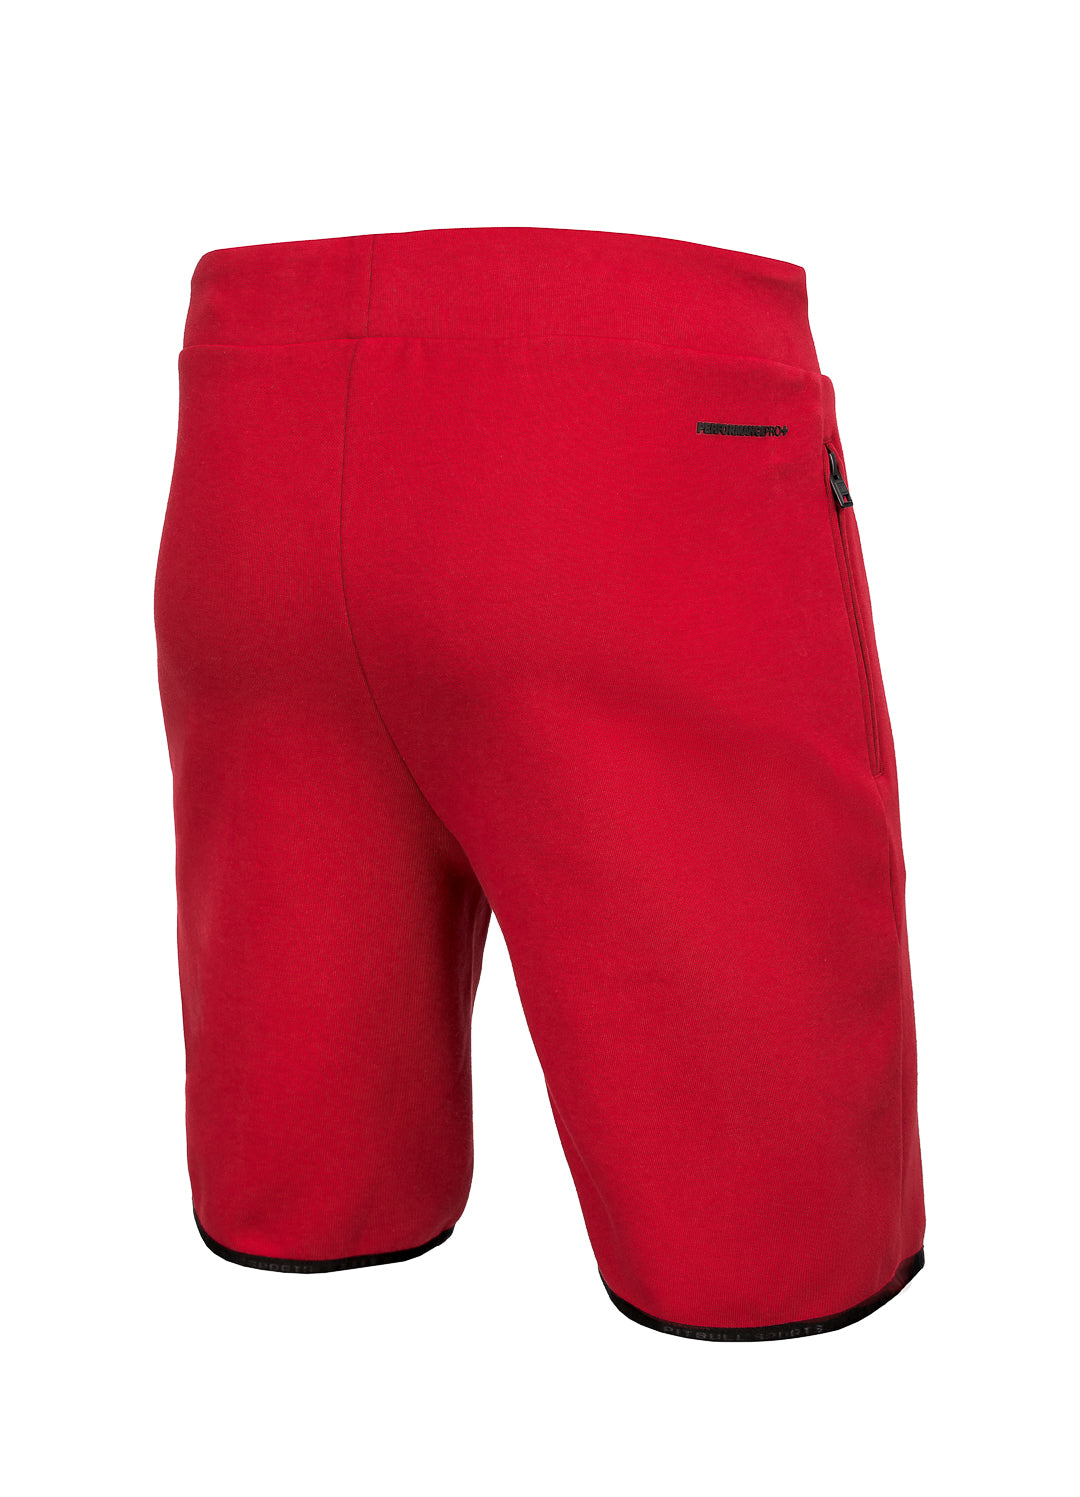 PHOENIX Red Shorts.